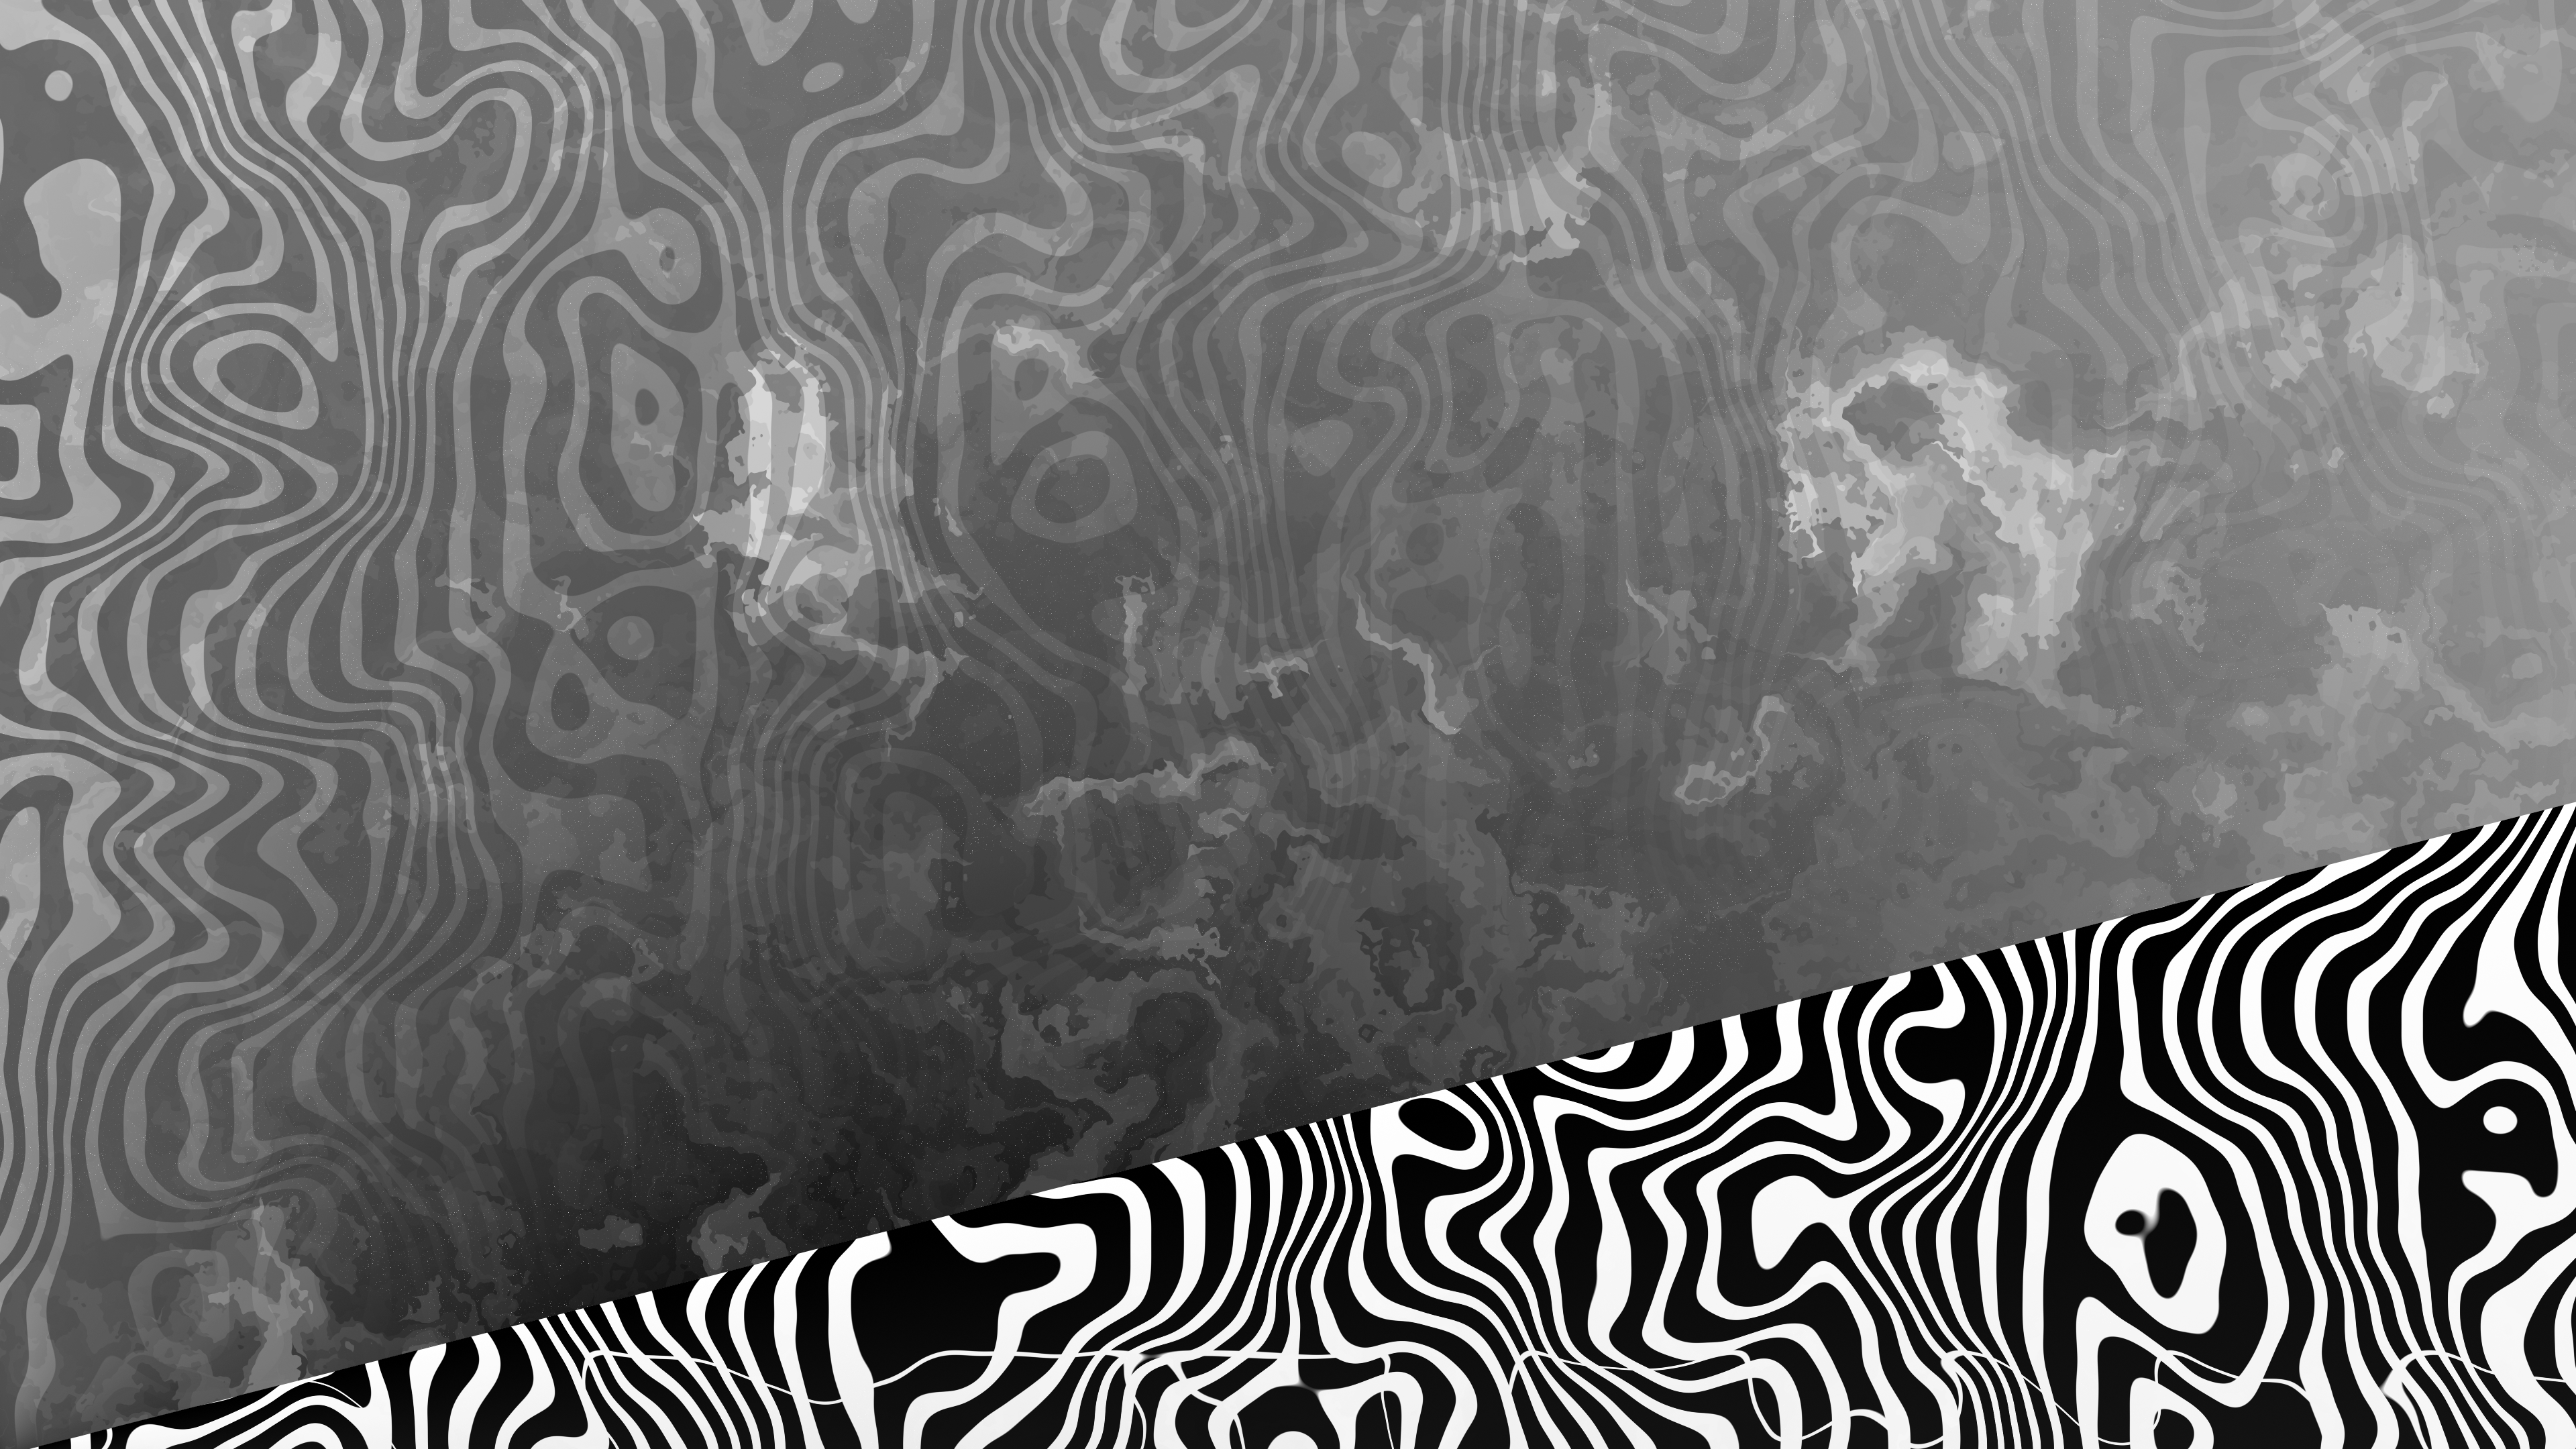 wynx's upcoming shows zebra card background visual art